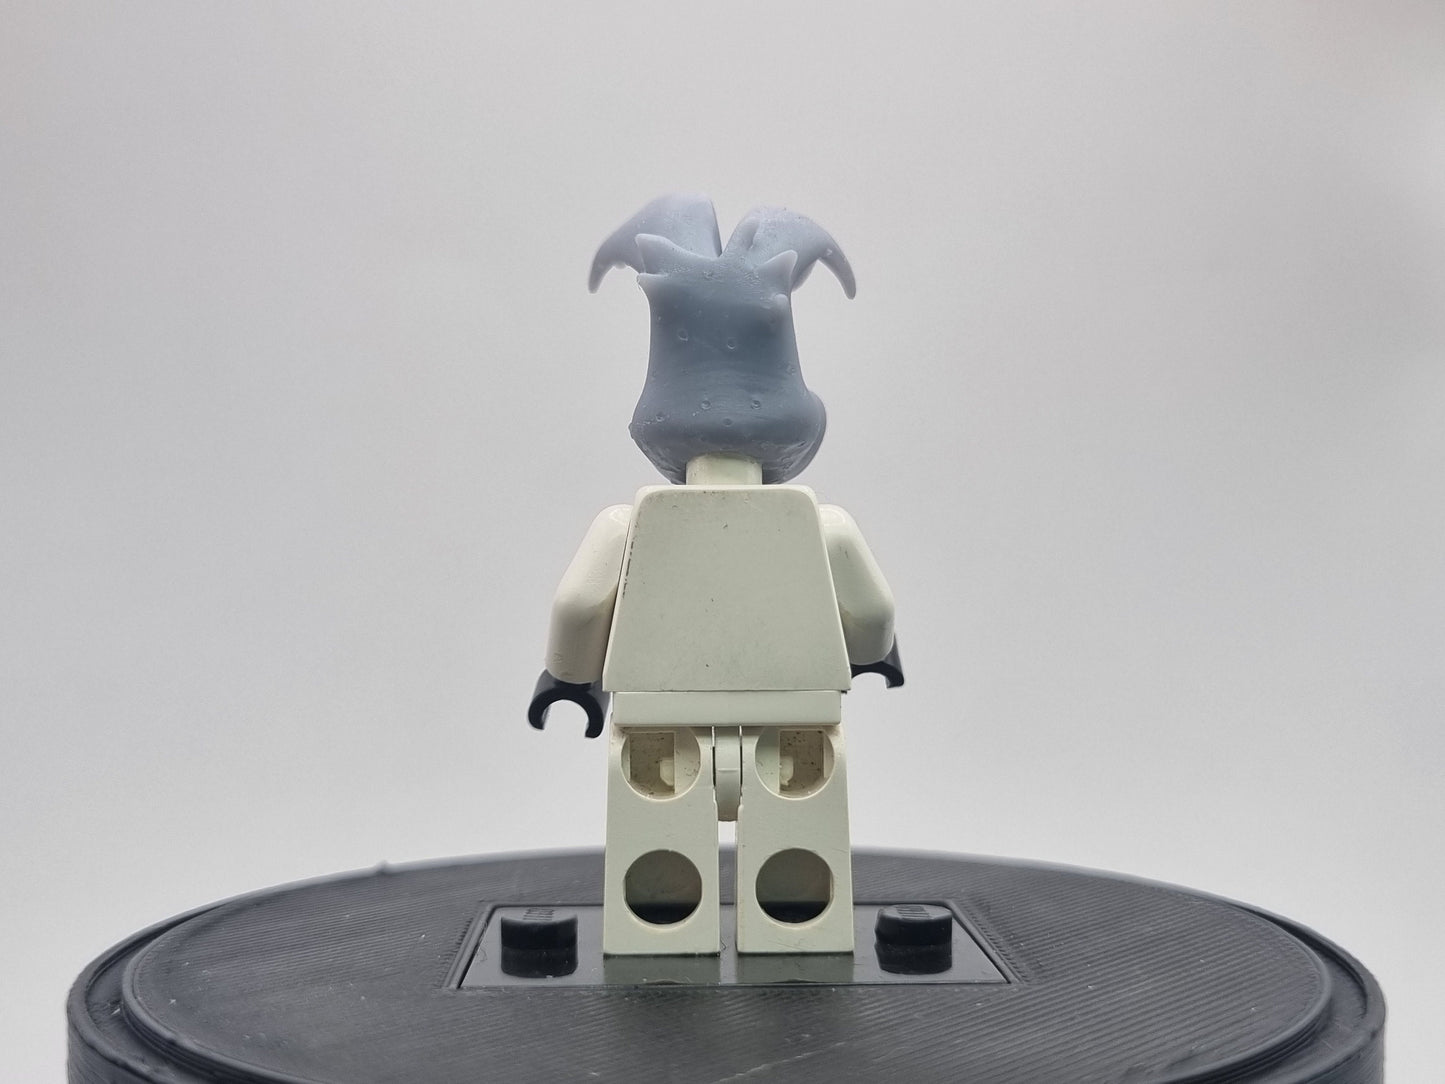 Building toy custom 3D printed beam man head!